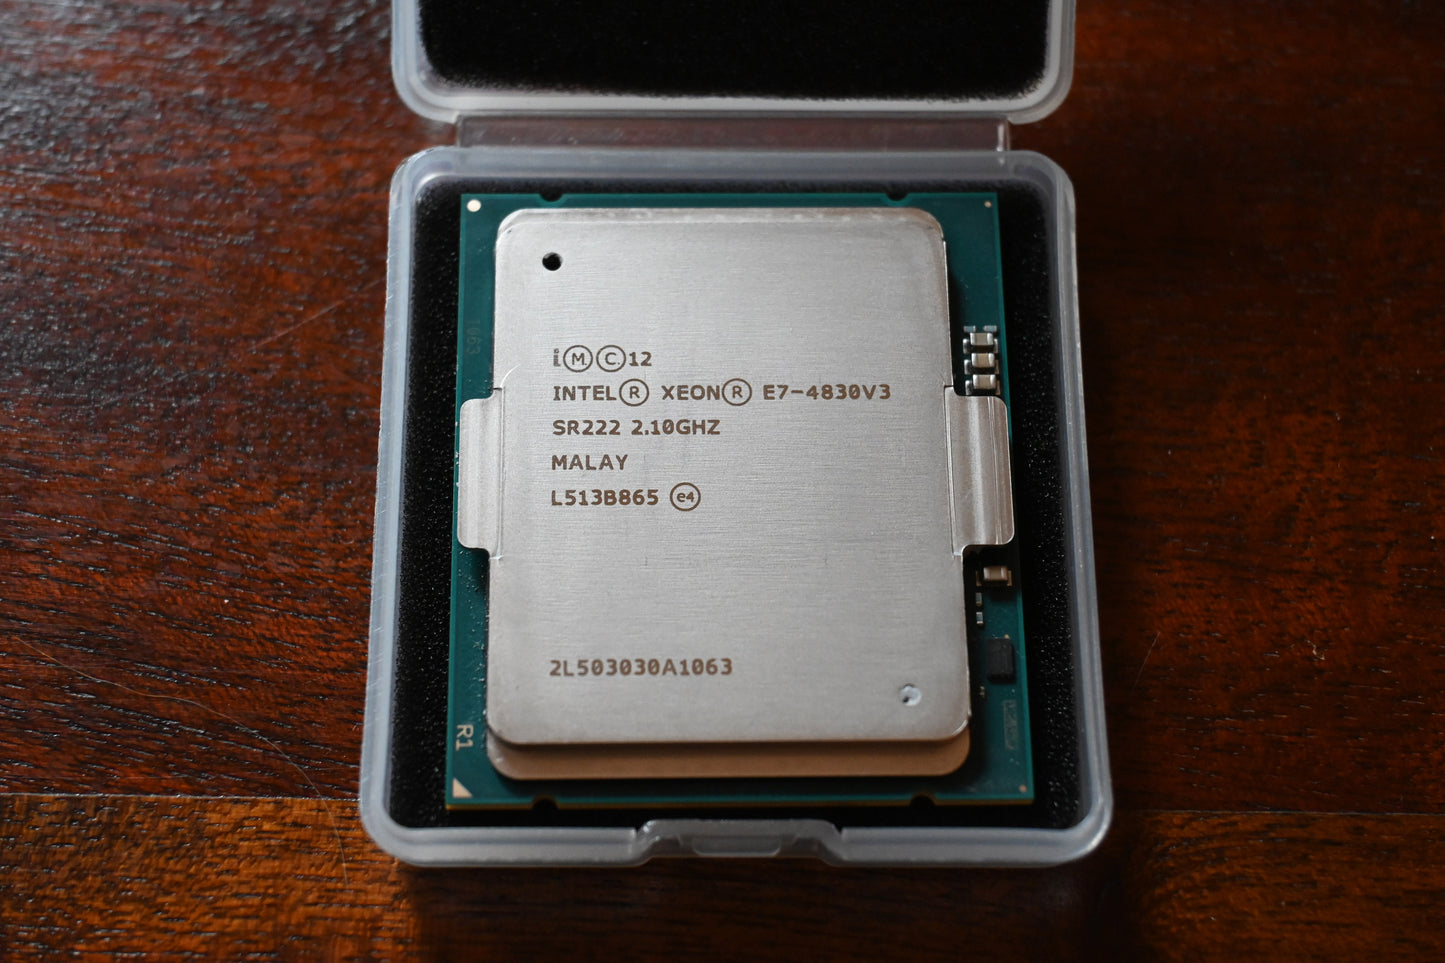 Intel XEON E7-4830V3 - SR222 - Tested